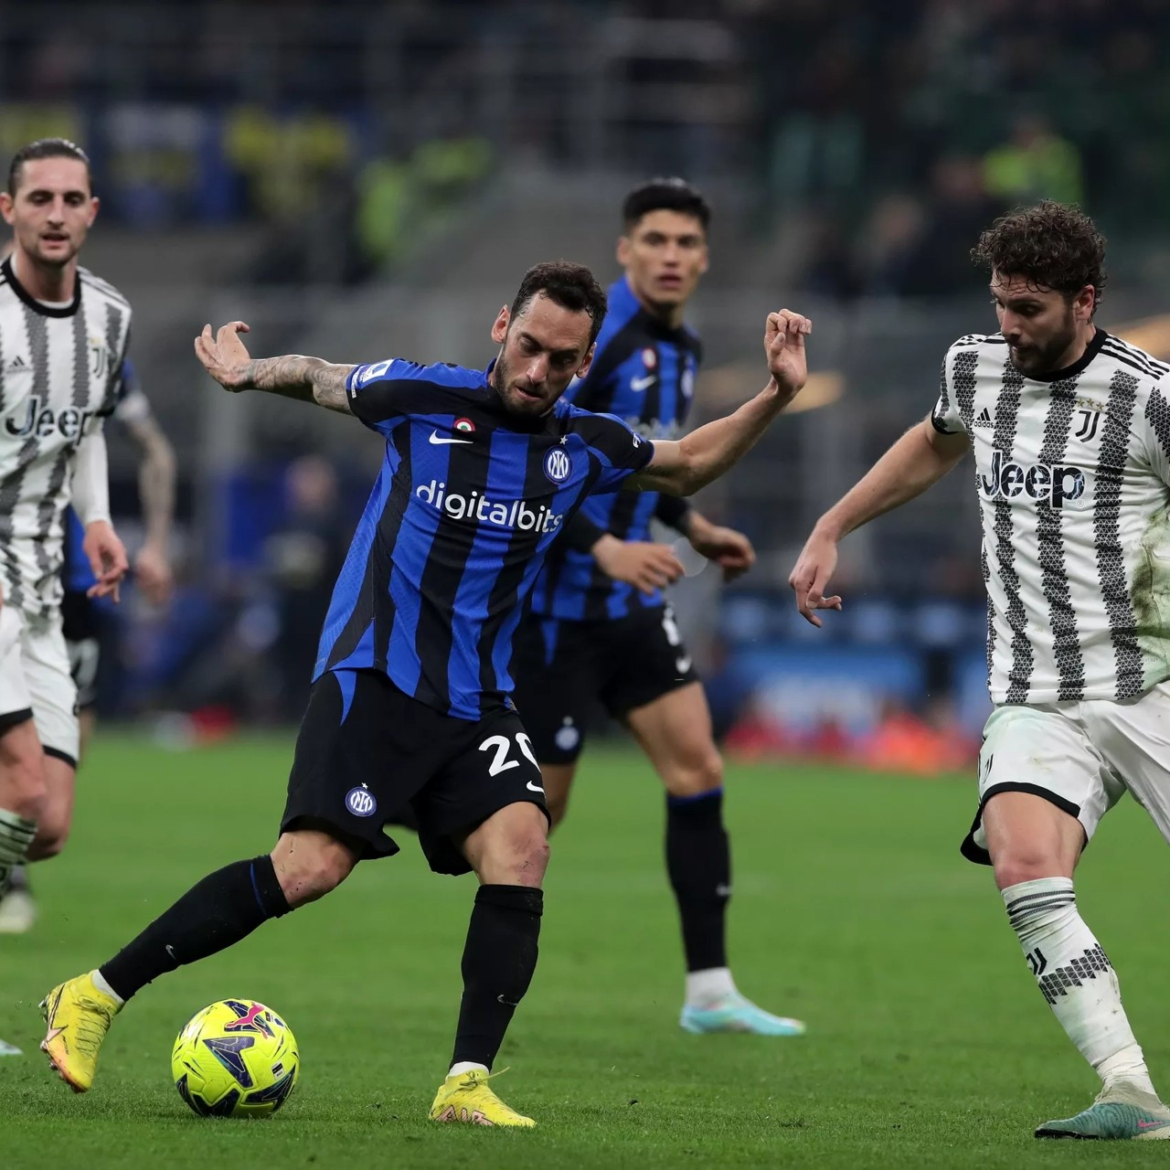 Juve vs Inter Milan semi-final match preview and prediction